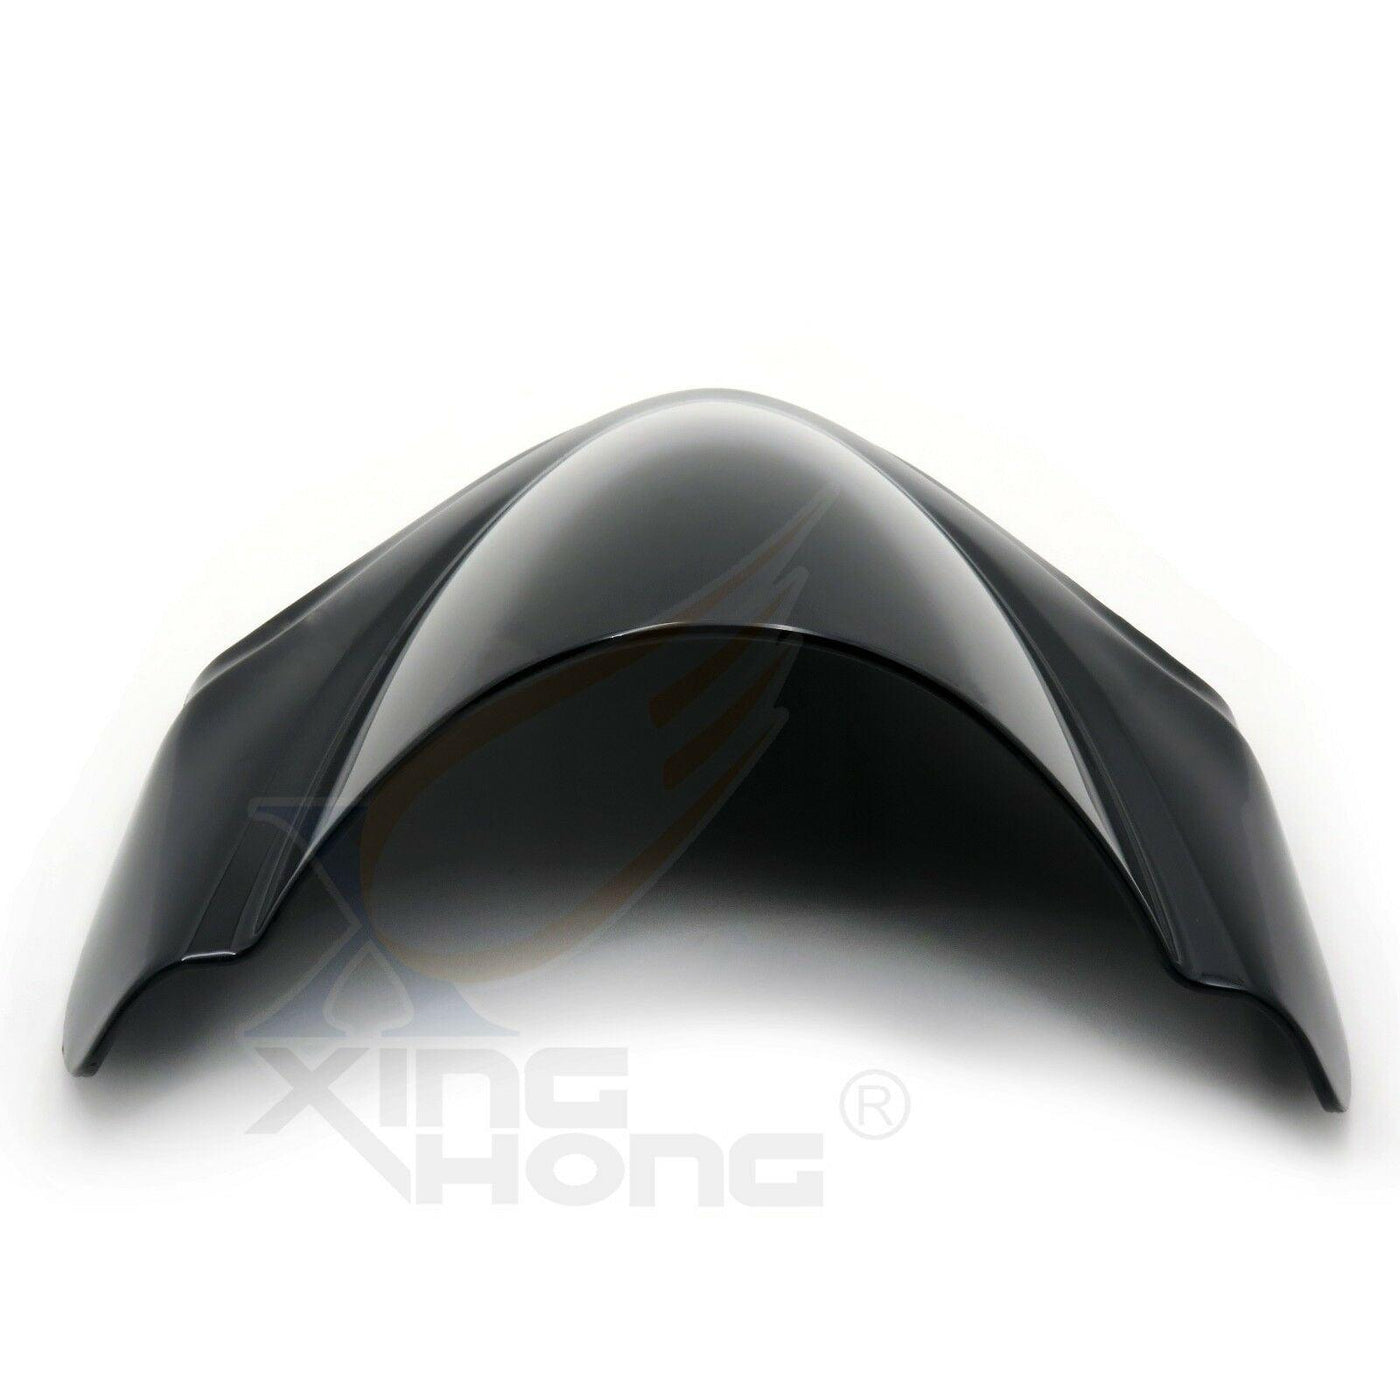 Double Bubble Windscreen Windshield for Suzuki Hayabusa GSXR1300R 2008-2011 - Moto Life Products